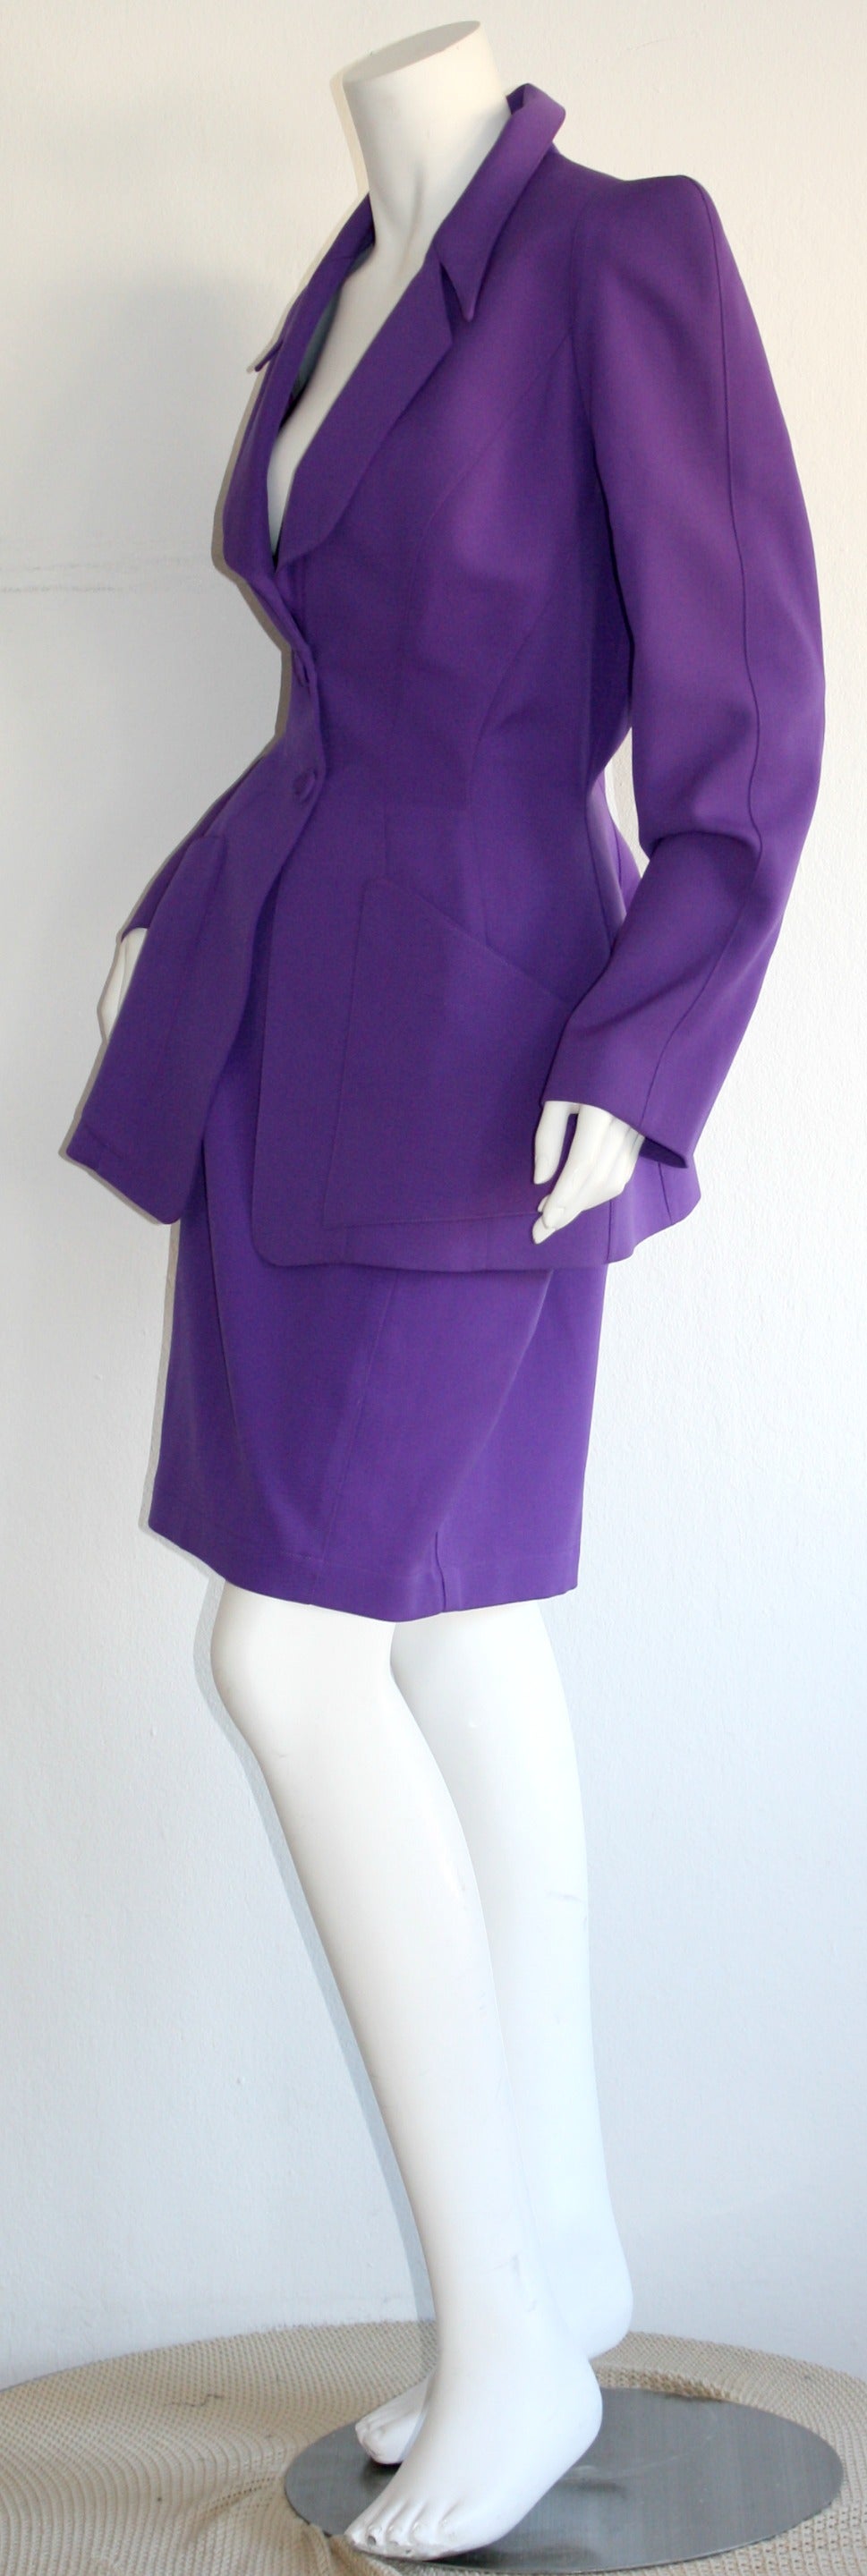 Women's Chic Vintage Thierry Mugler Purple Signature Skirt Suit